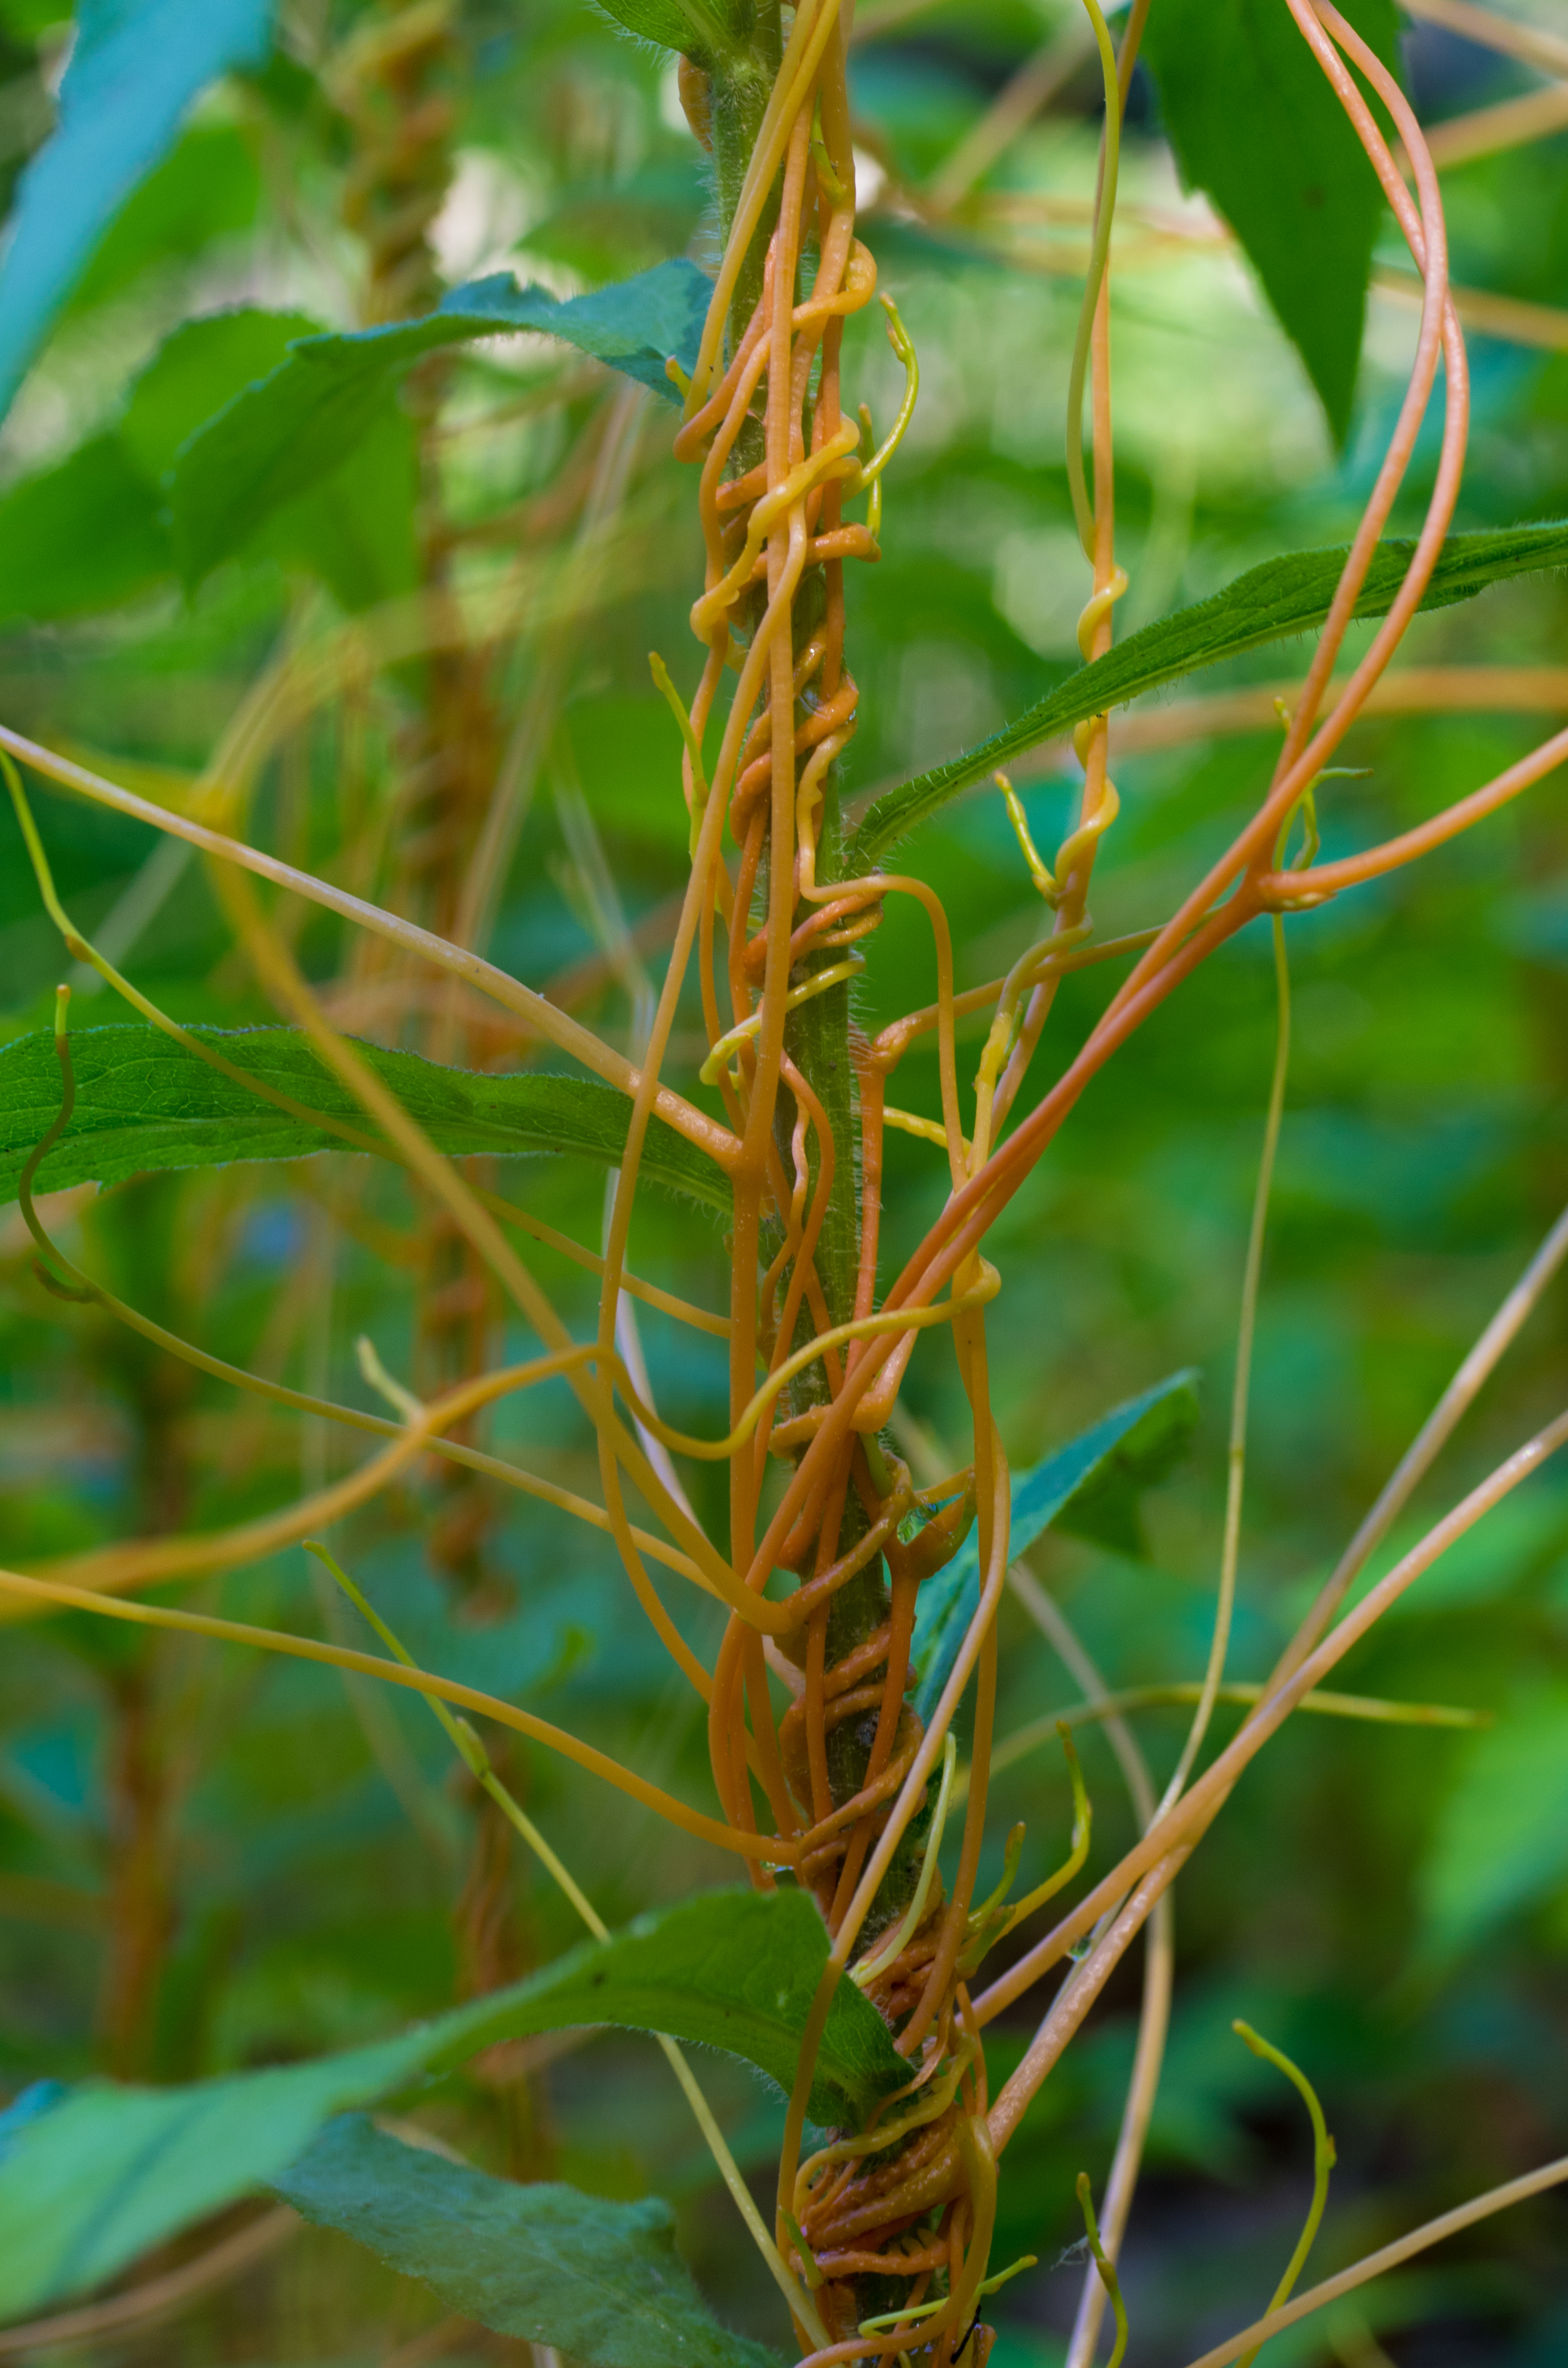 Floraform – an exploration of differential growth | Nervous System blog